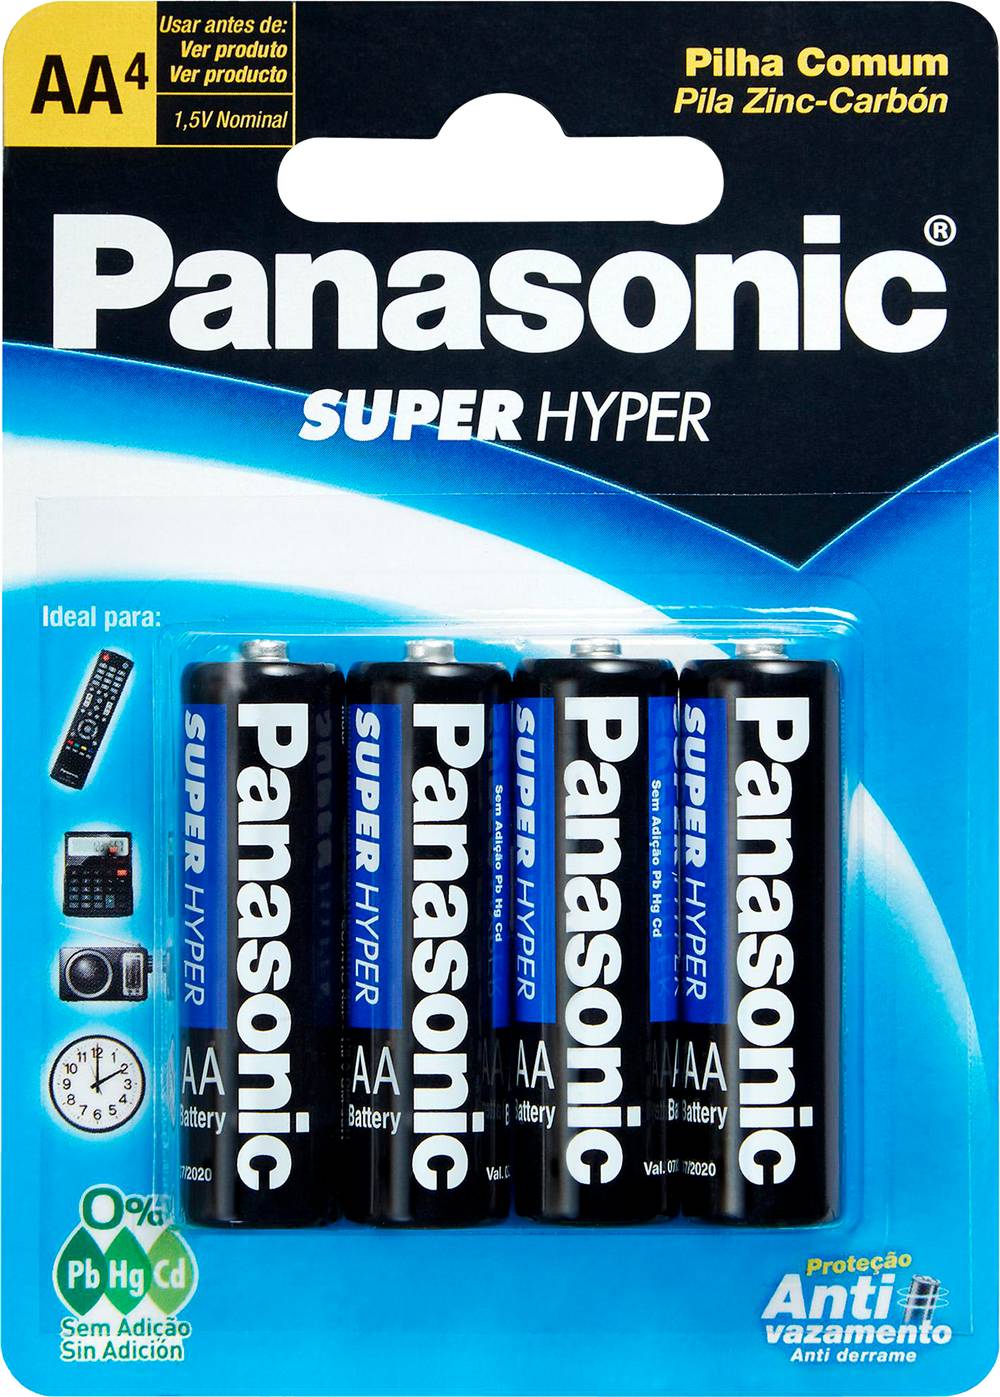 Panasonic pilha comum superhyper aa (4 un)